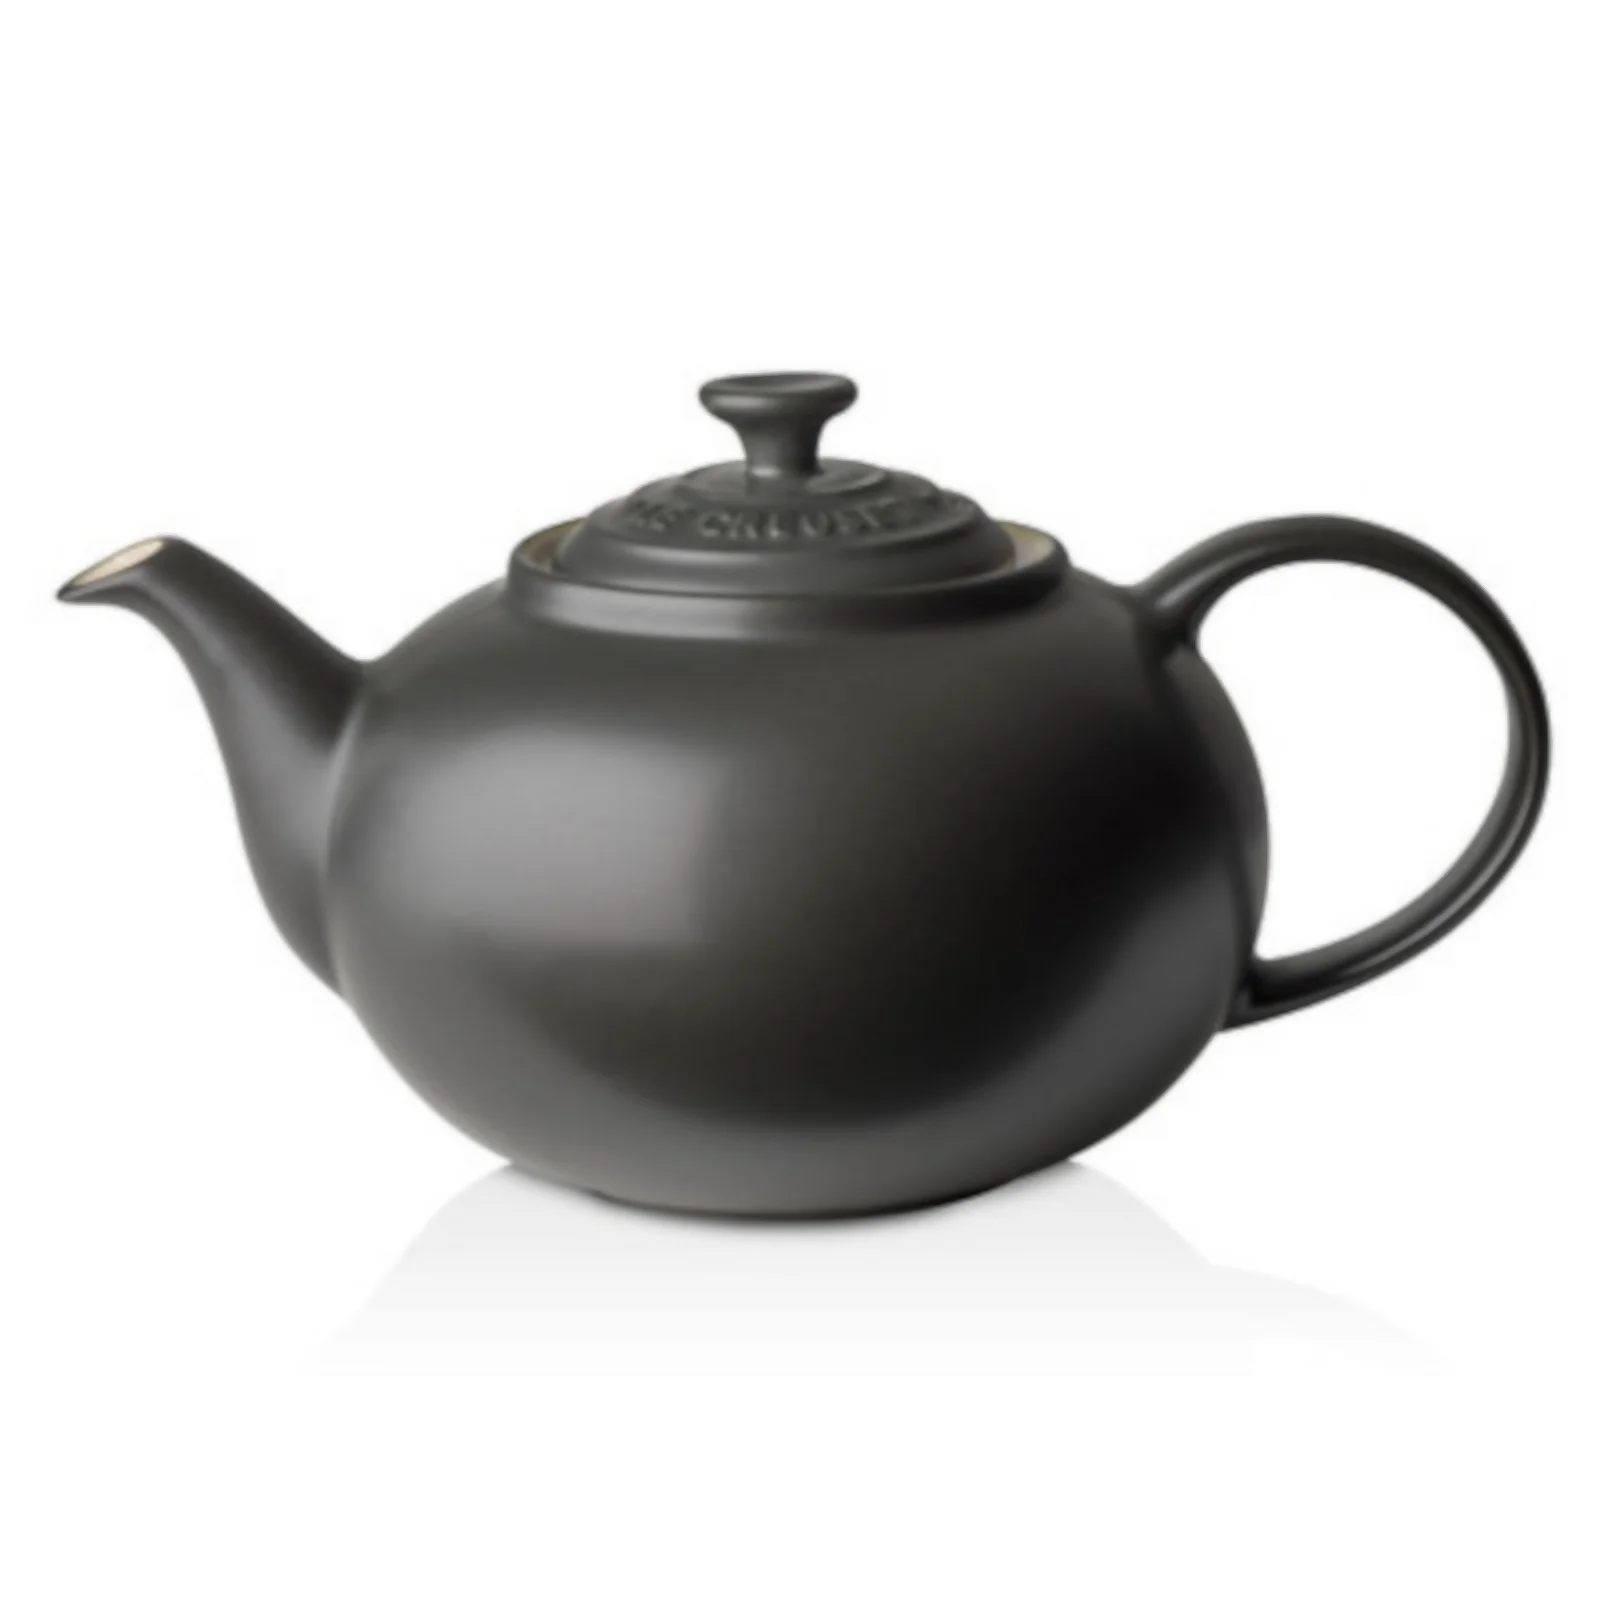 Le Creuset Stoneware Classic Teapot - Satin Black Image 1